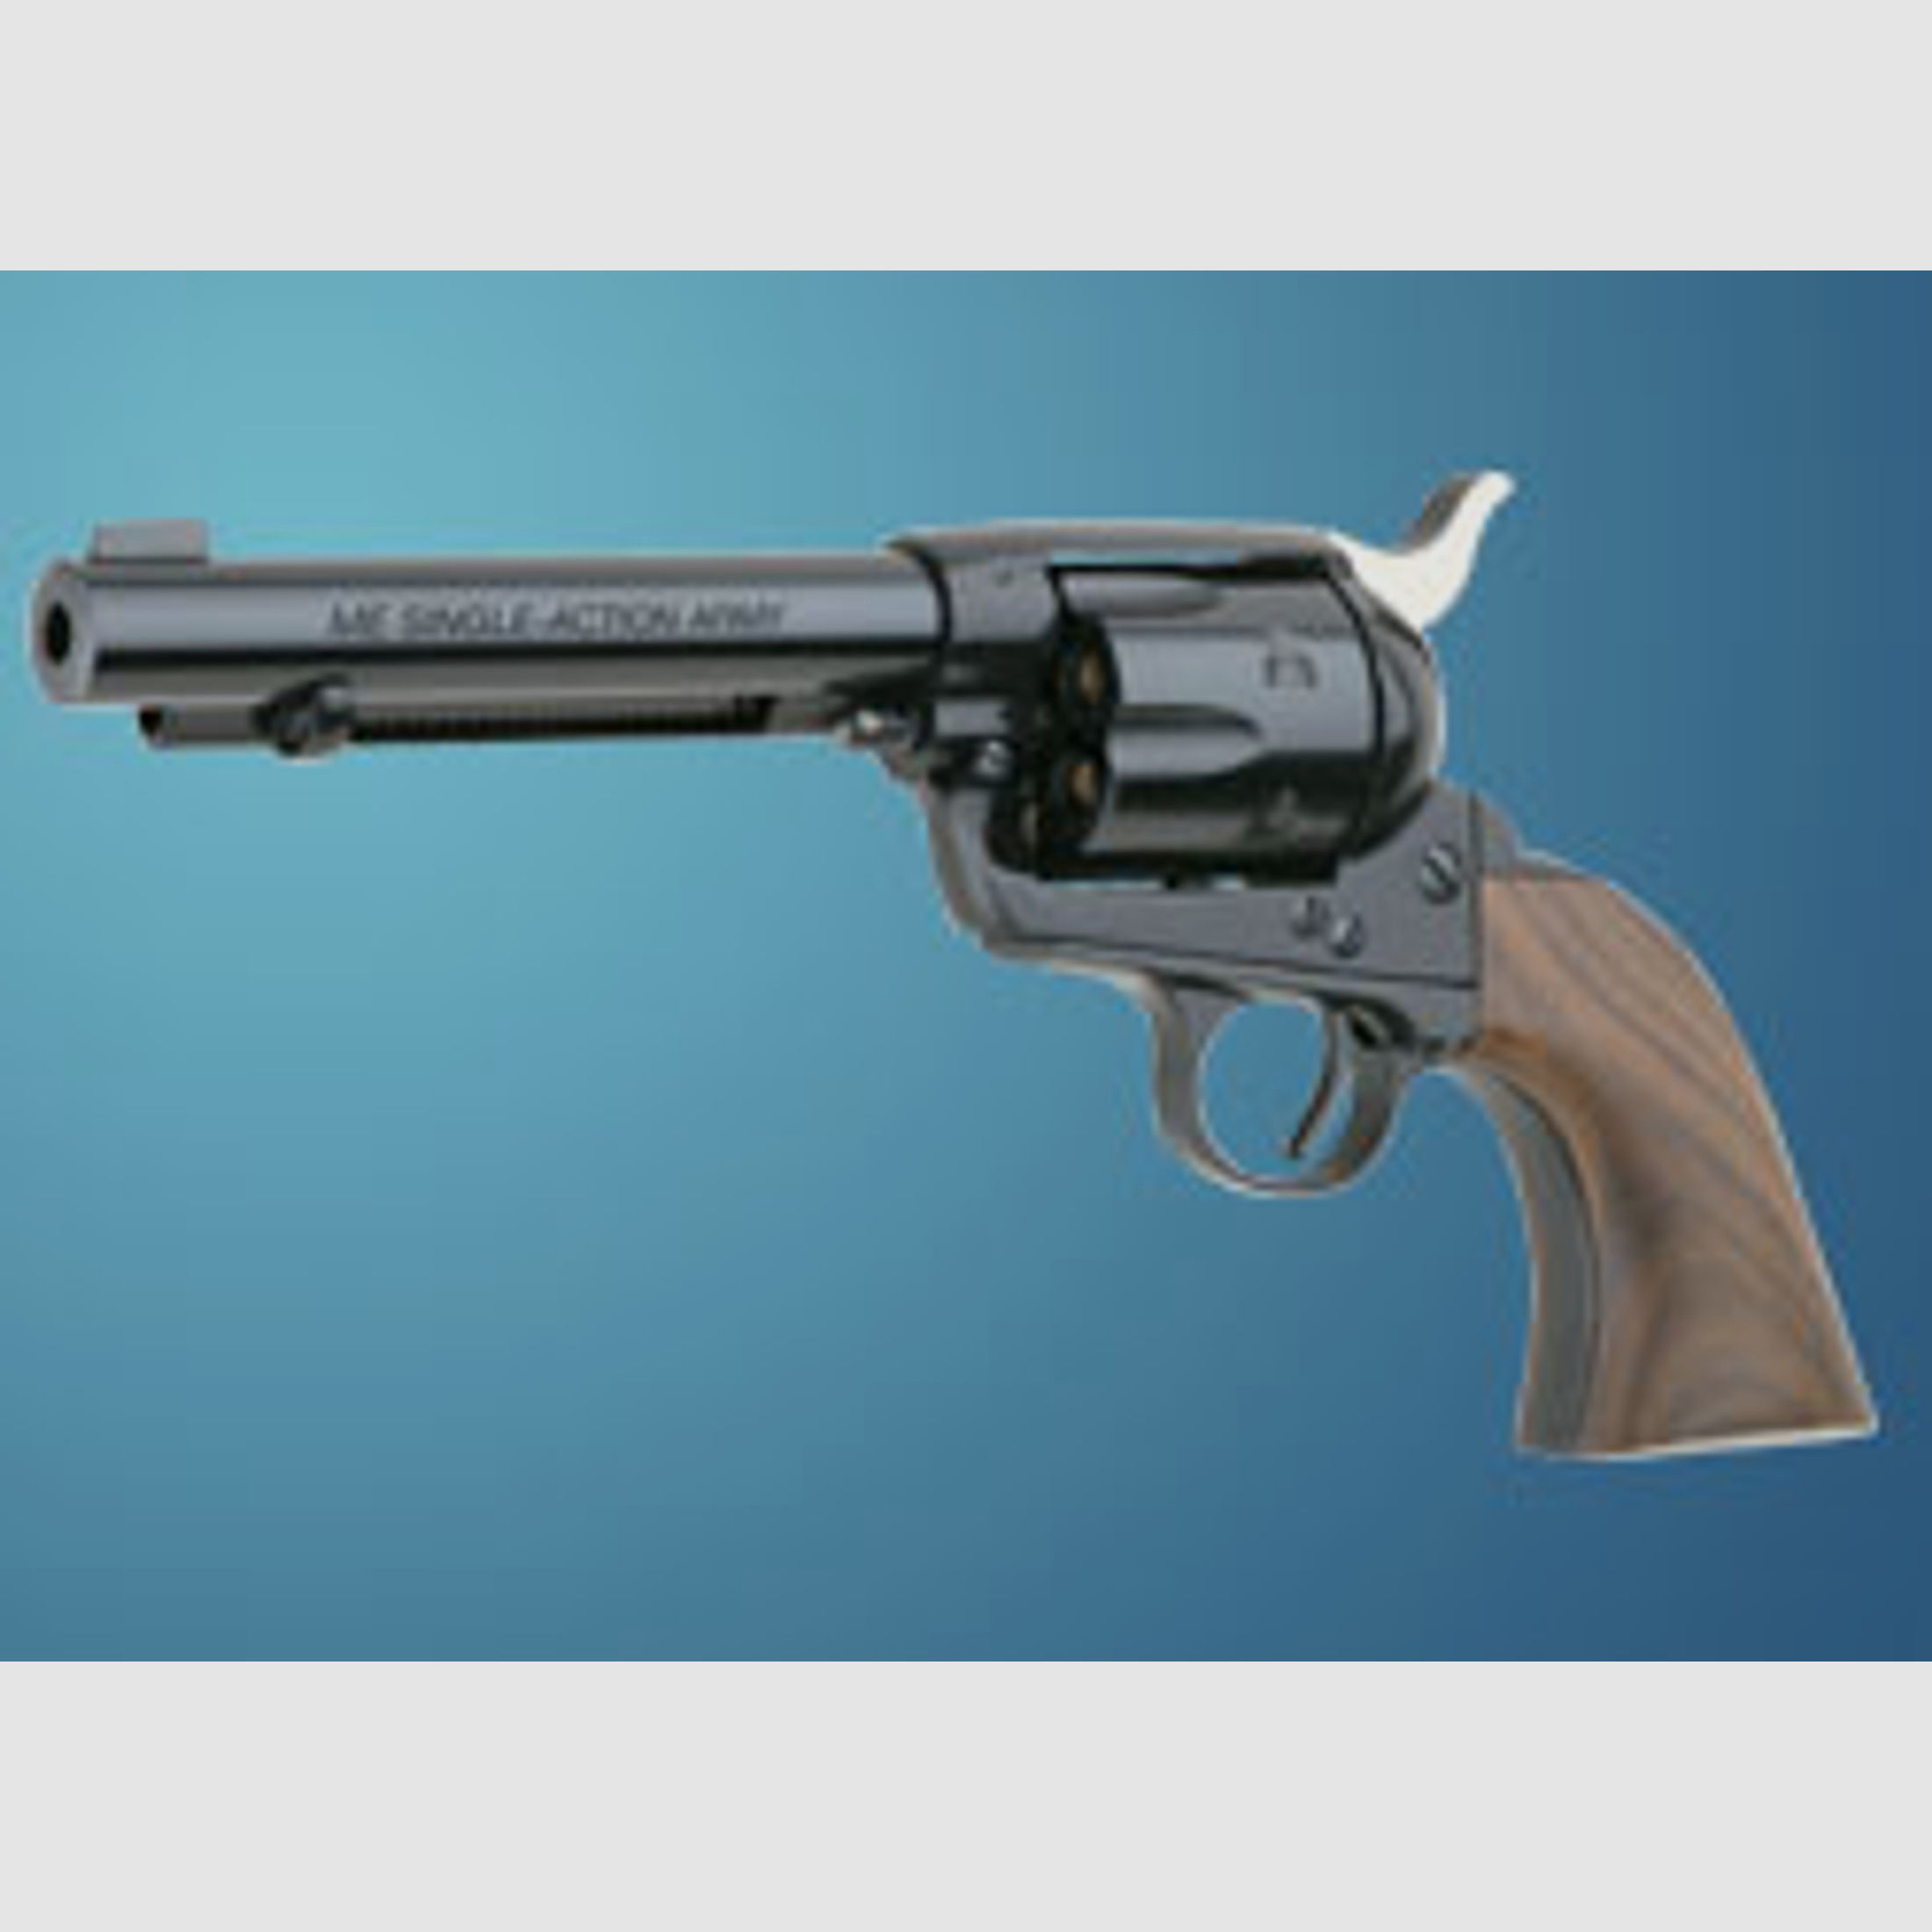 ME "F" LEP Druckluft-Revolver Single-Action Army 5,5mm, brüniert mit Holzgriff